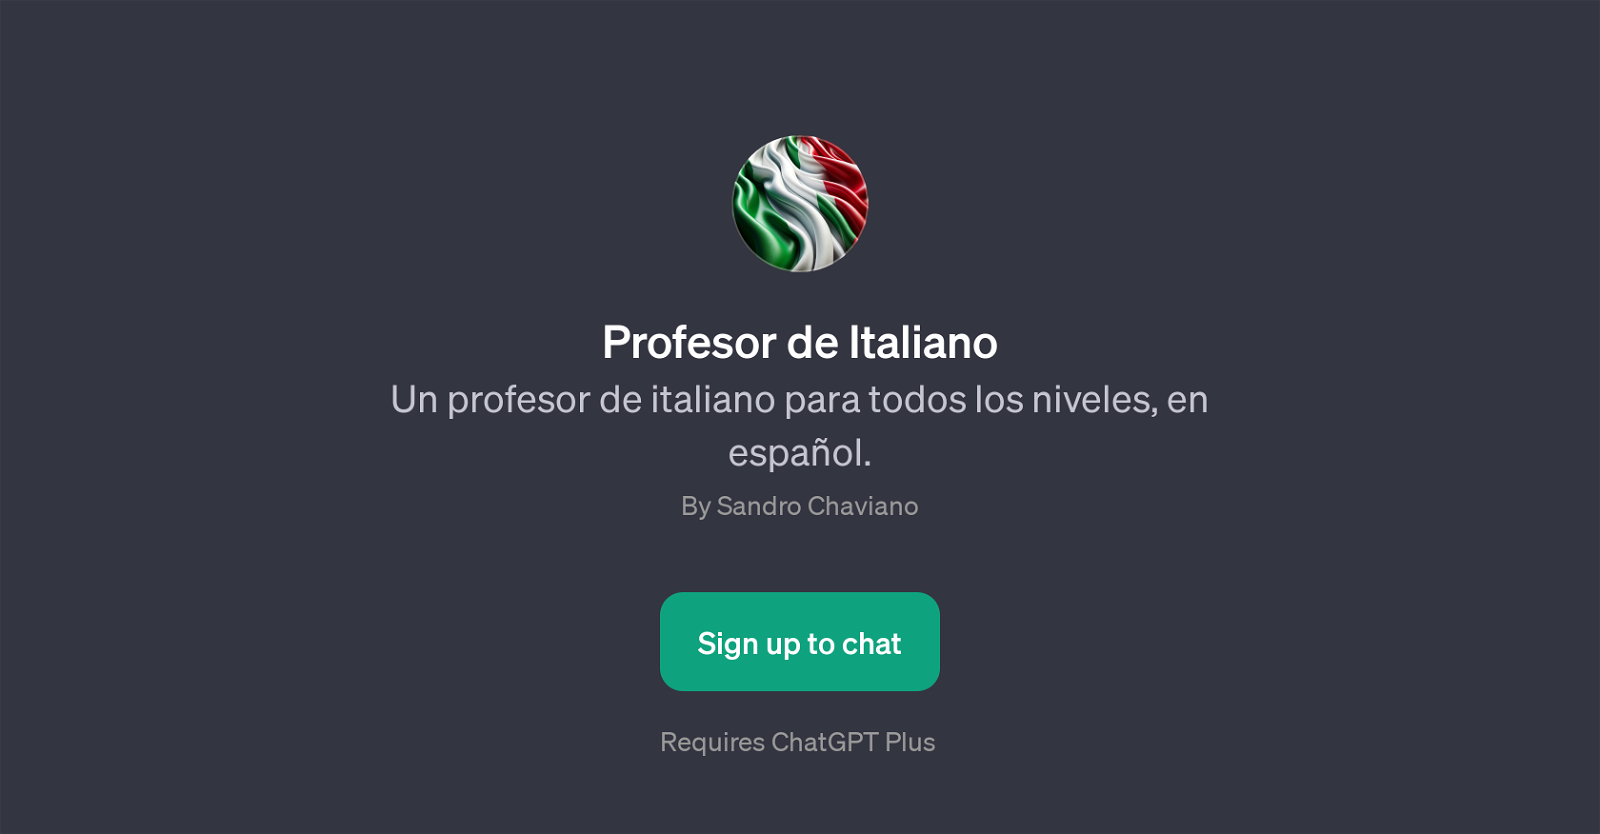 Profesor de Italiano website